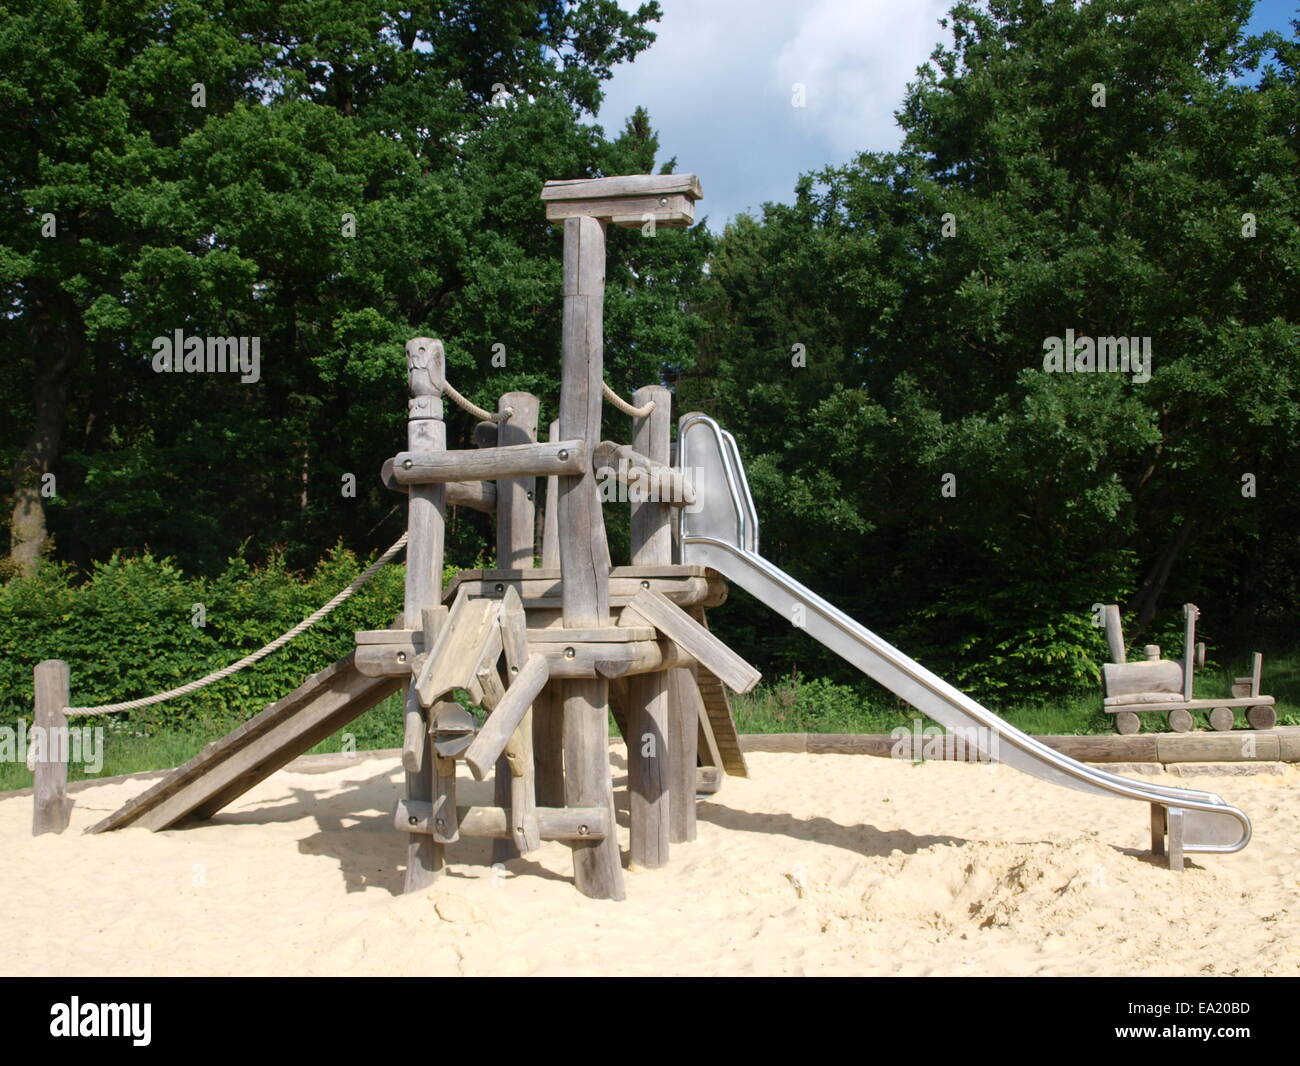 Playground with sand box and slides. Stock Photo